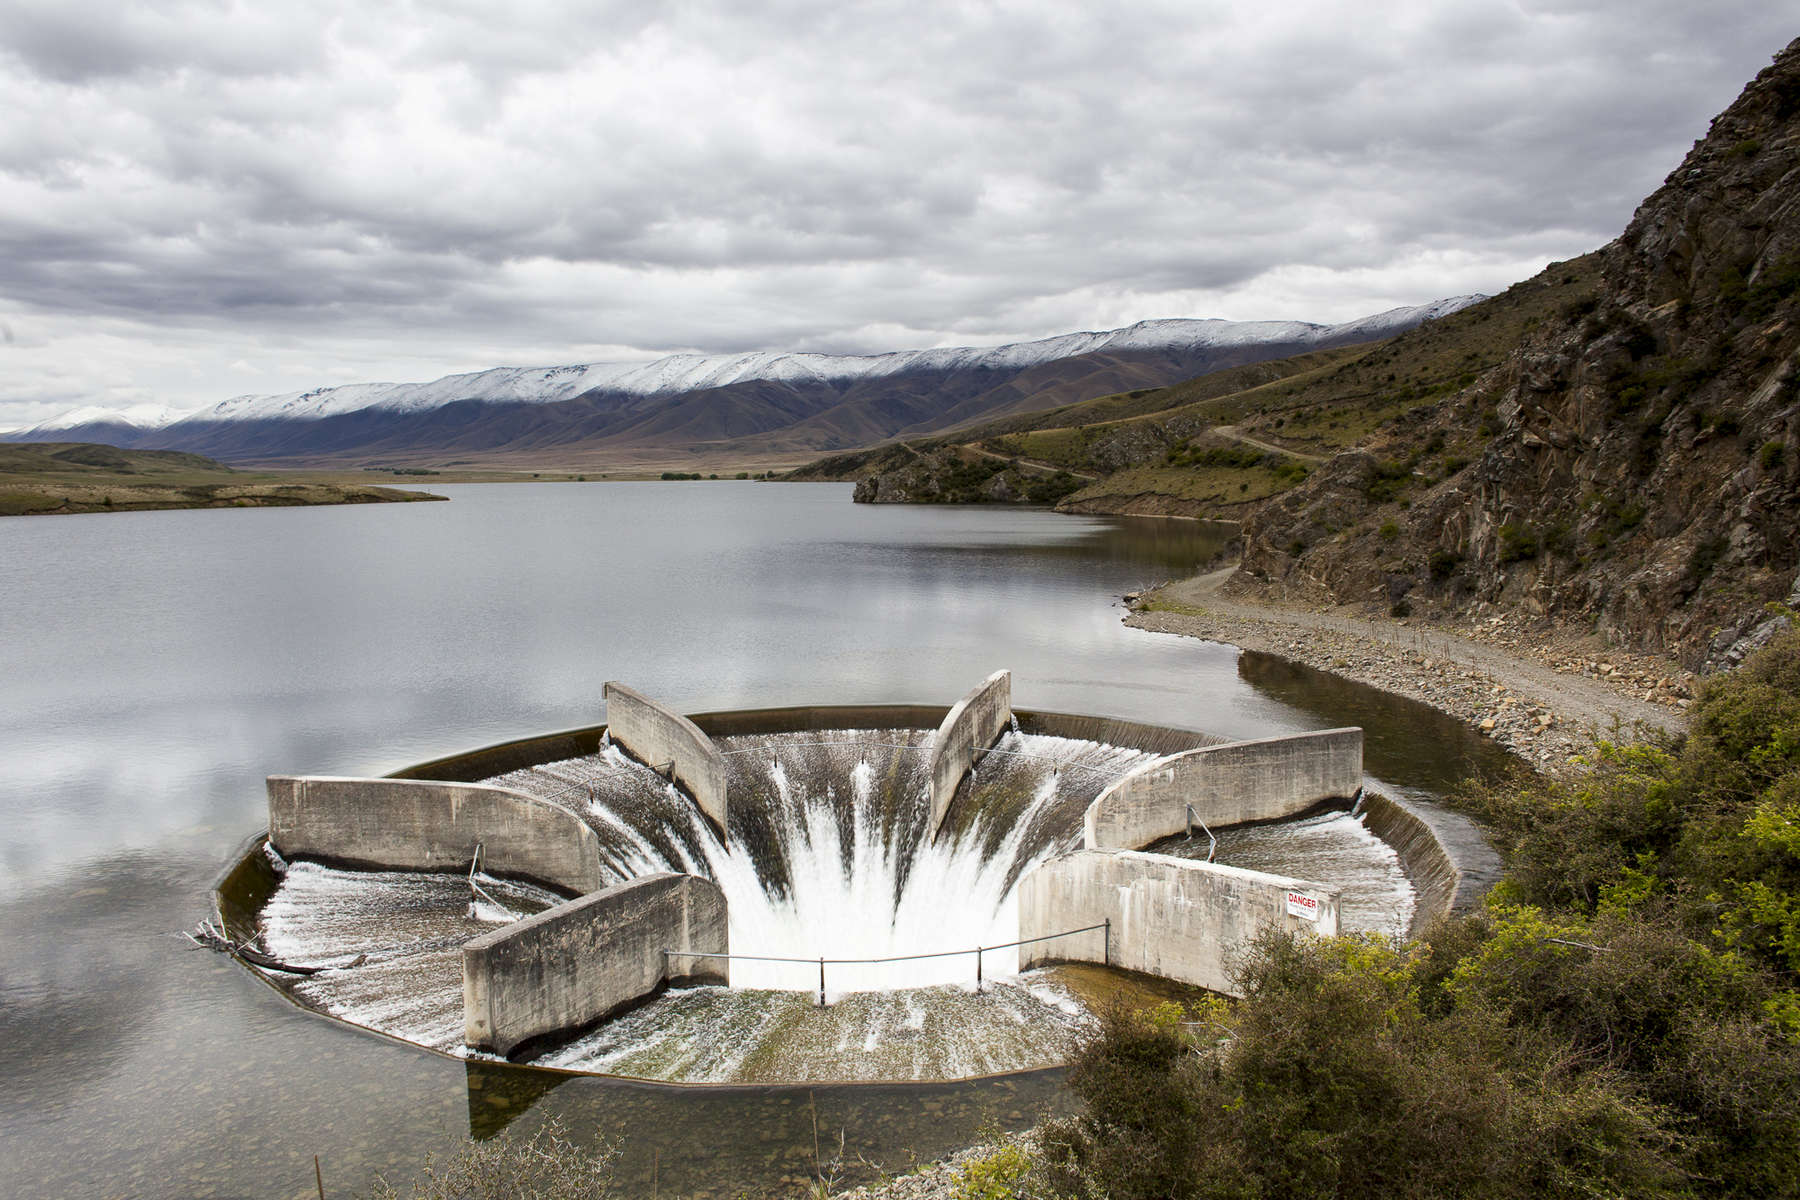 The Gordon Dam generates hydro-electric power in South West Tasmania, Australia.  Shot in Australia by Vermont photographer Judd Lamphere.